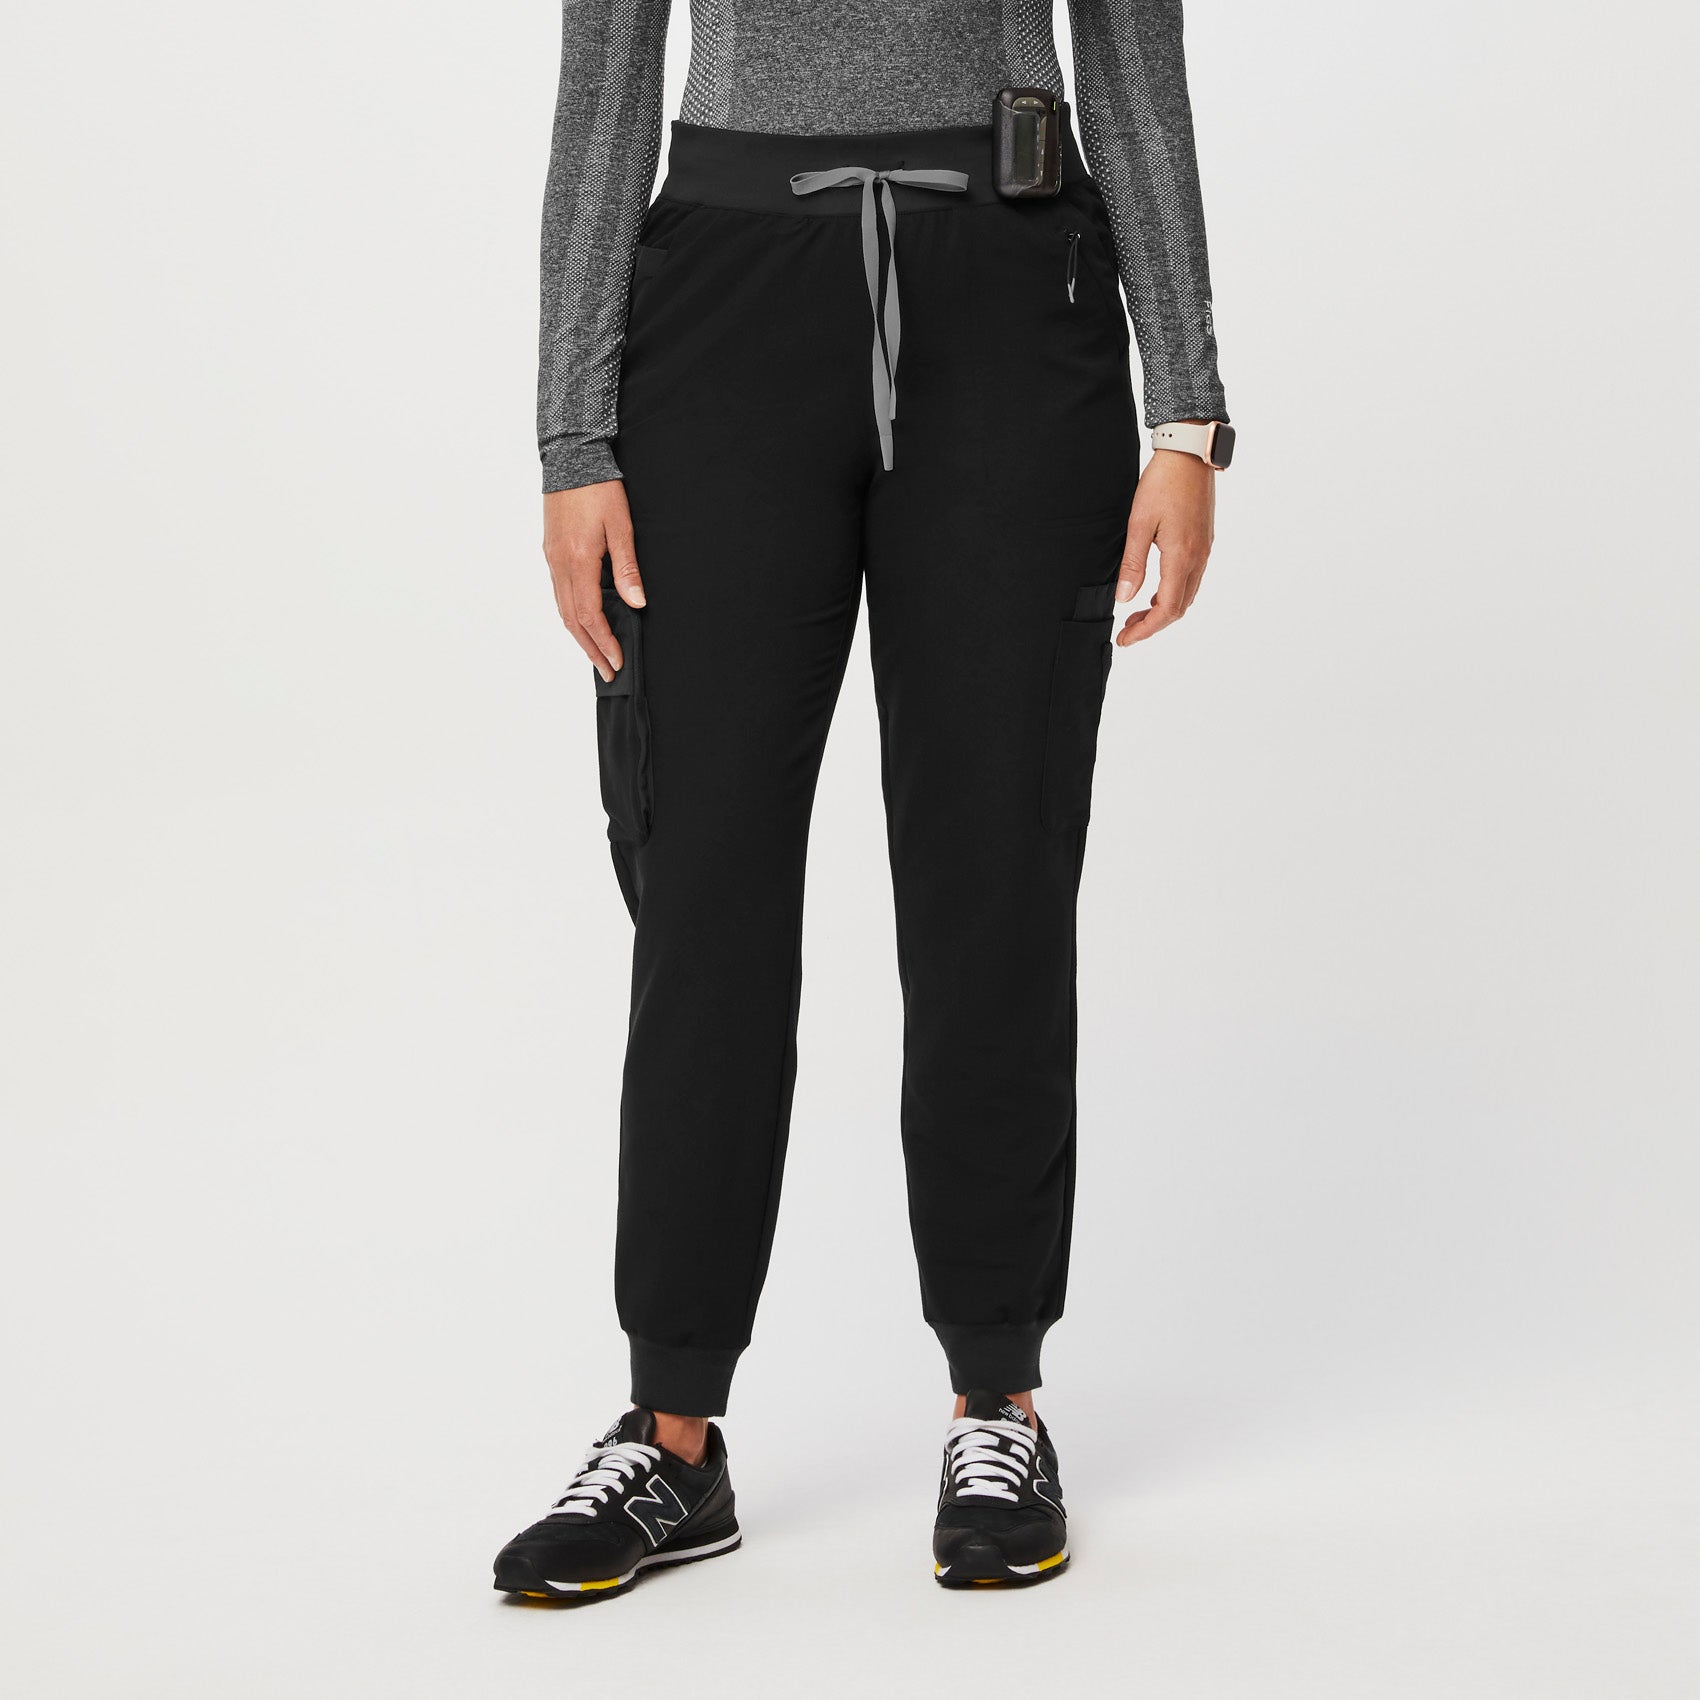 Wongn Dark Gray Sports Pants Pocket Black Jogging Sweatpants Women